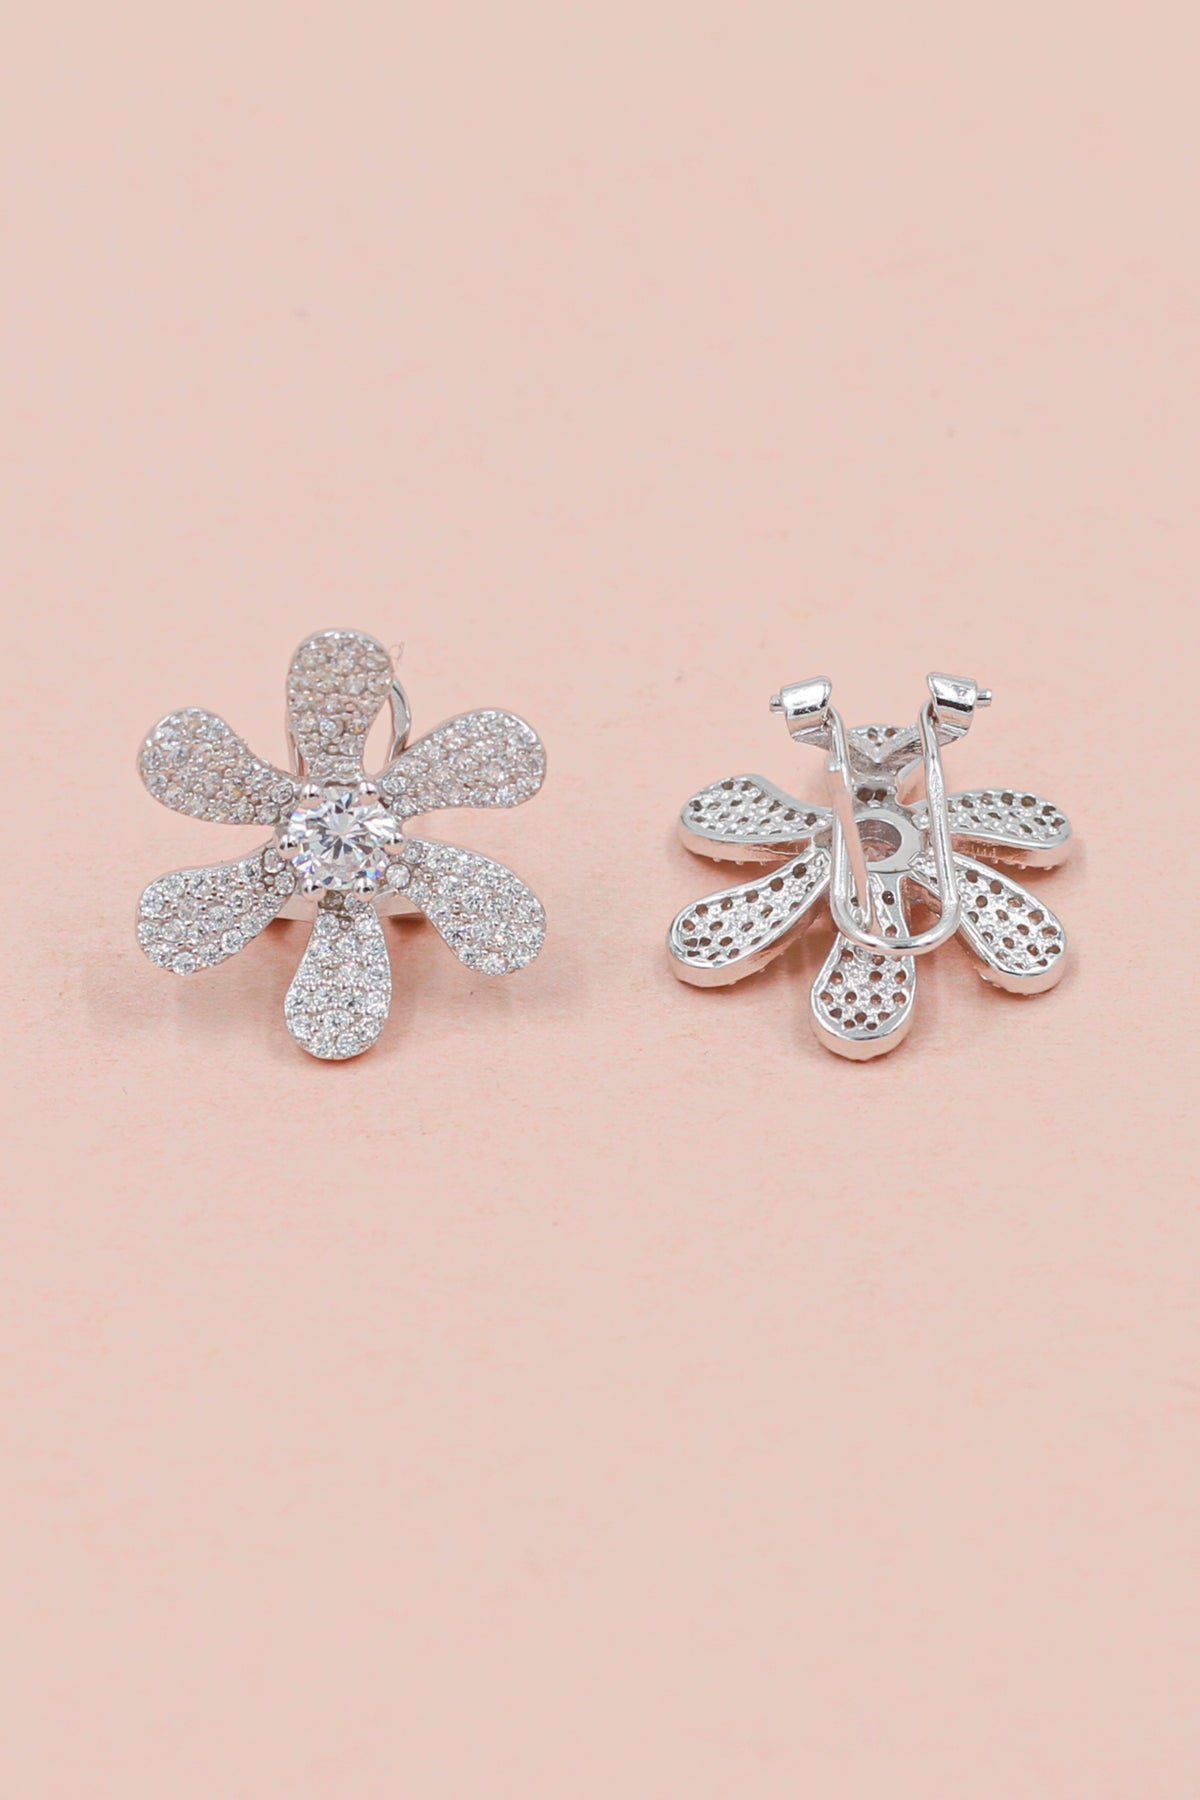 Enchanted Garden Silver Floral Earrings